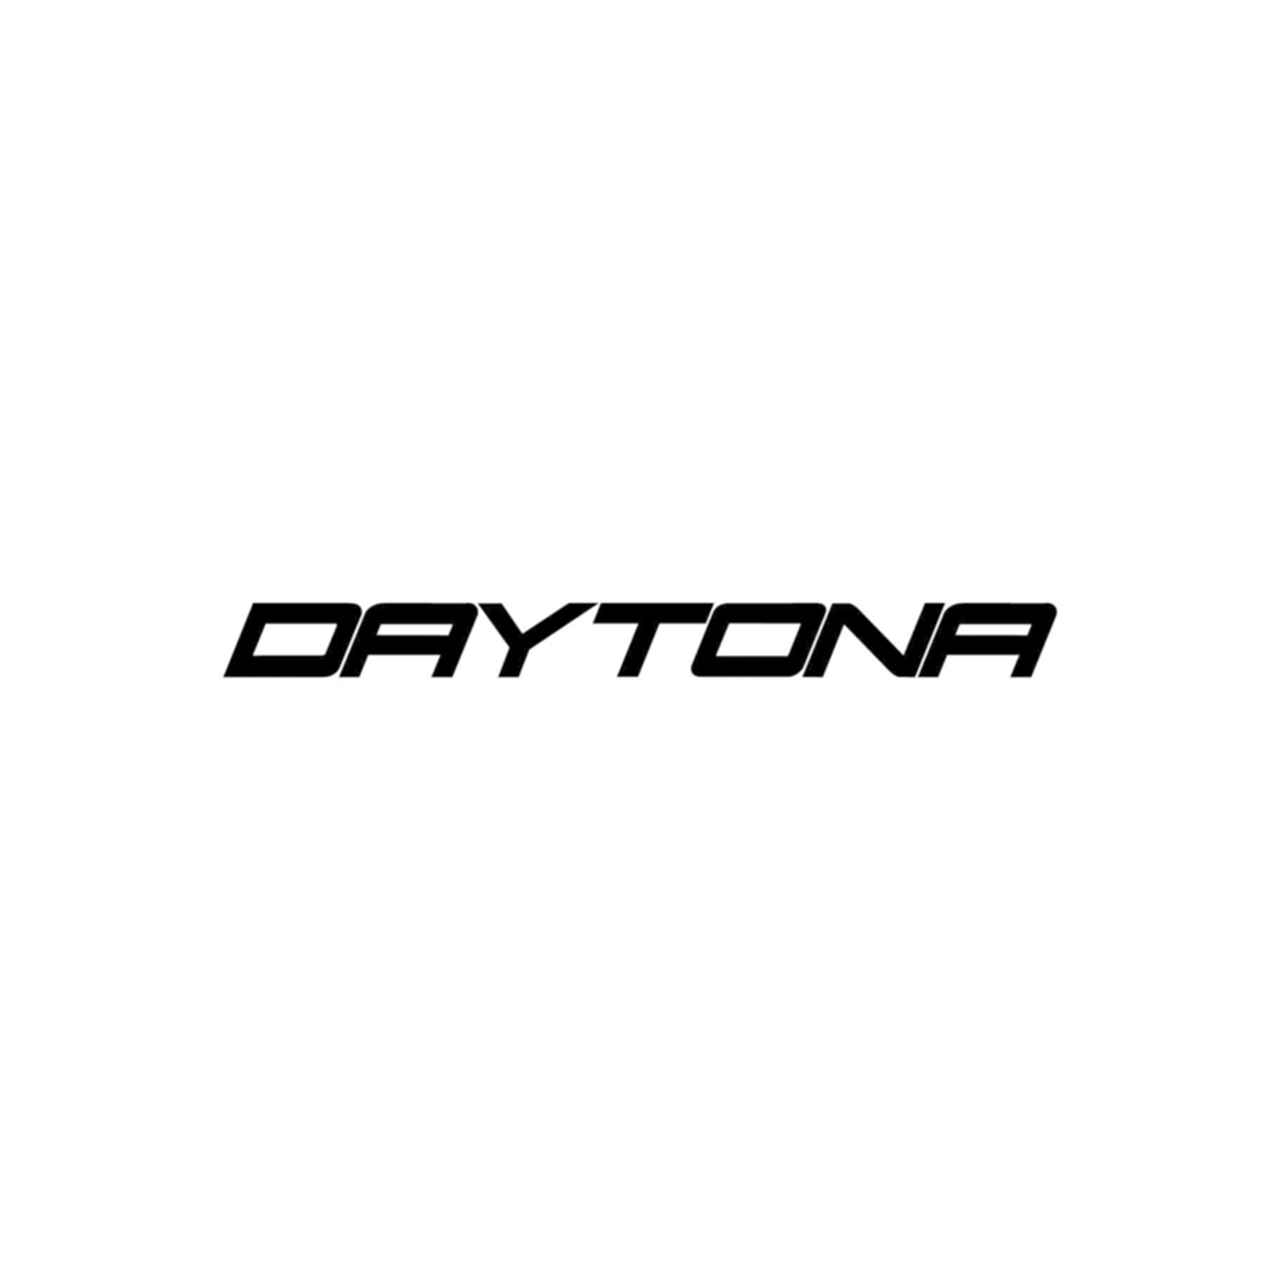 Triumph Daytona Logo - Triumph Daytona Vinyl Decal